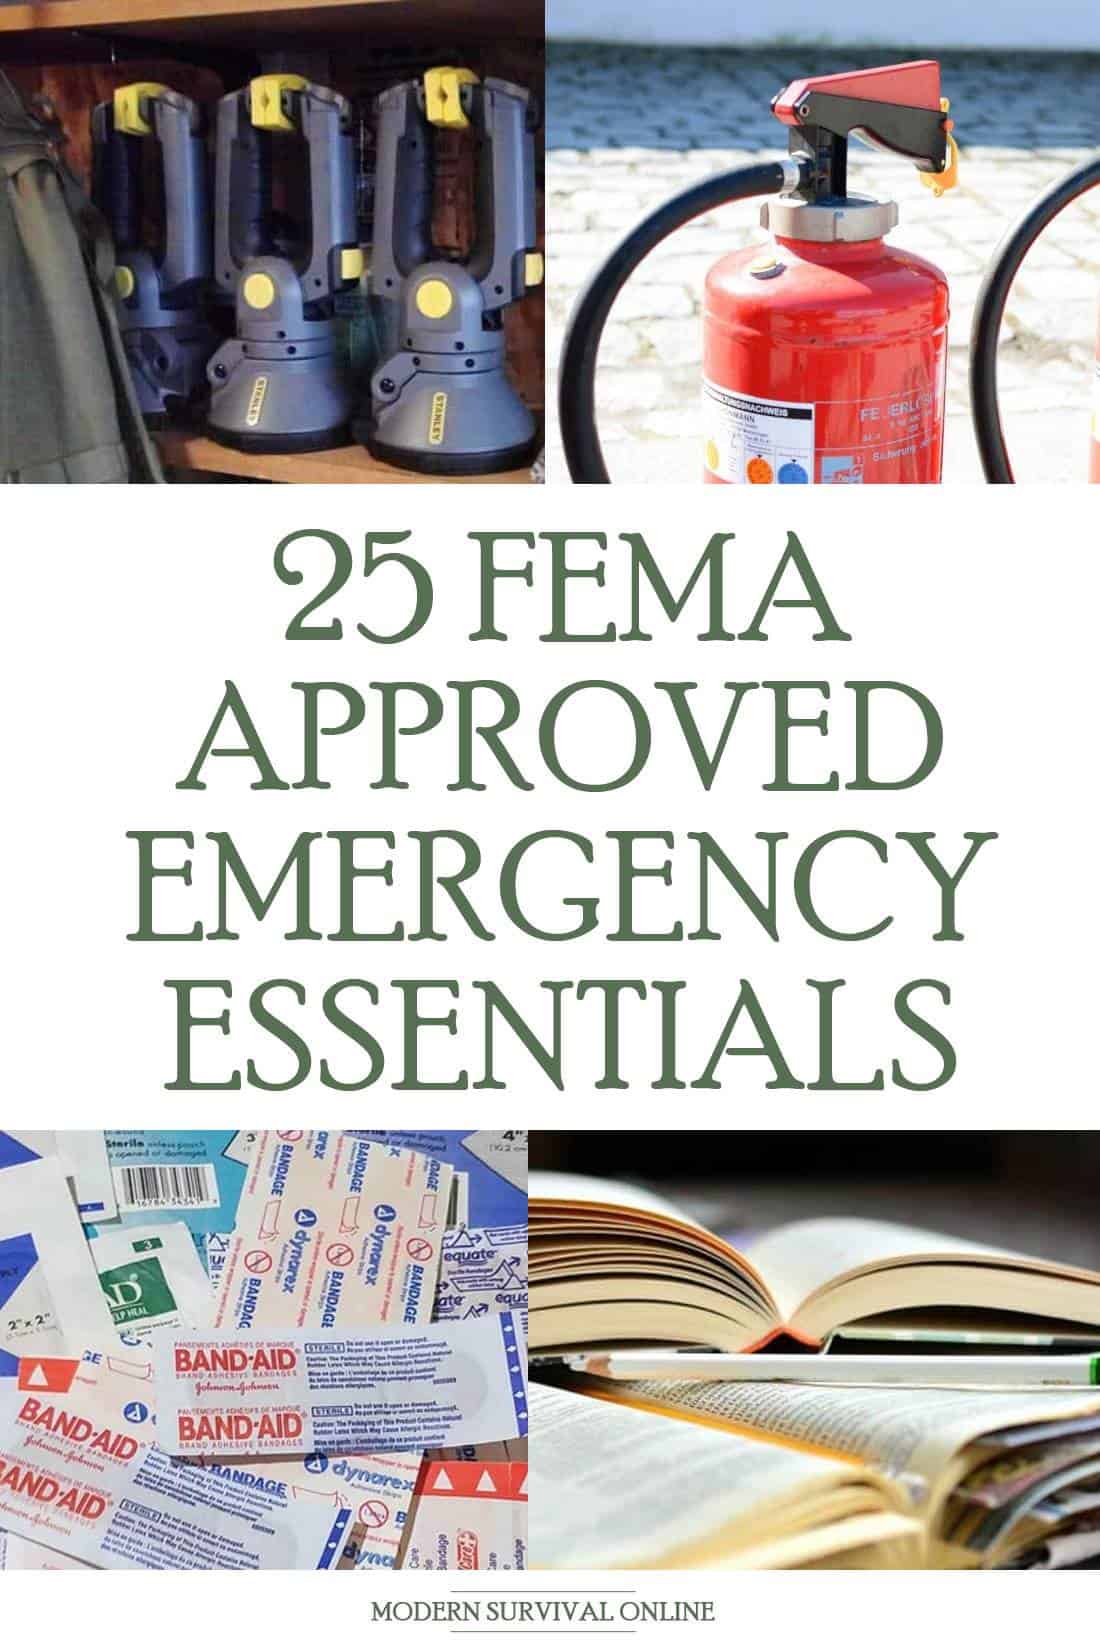 FEMA survival items pin image